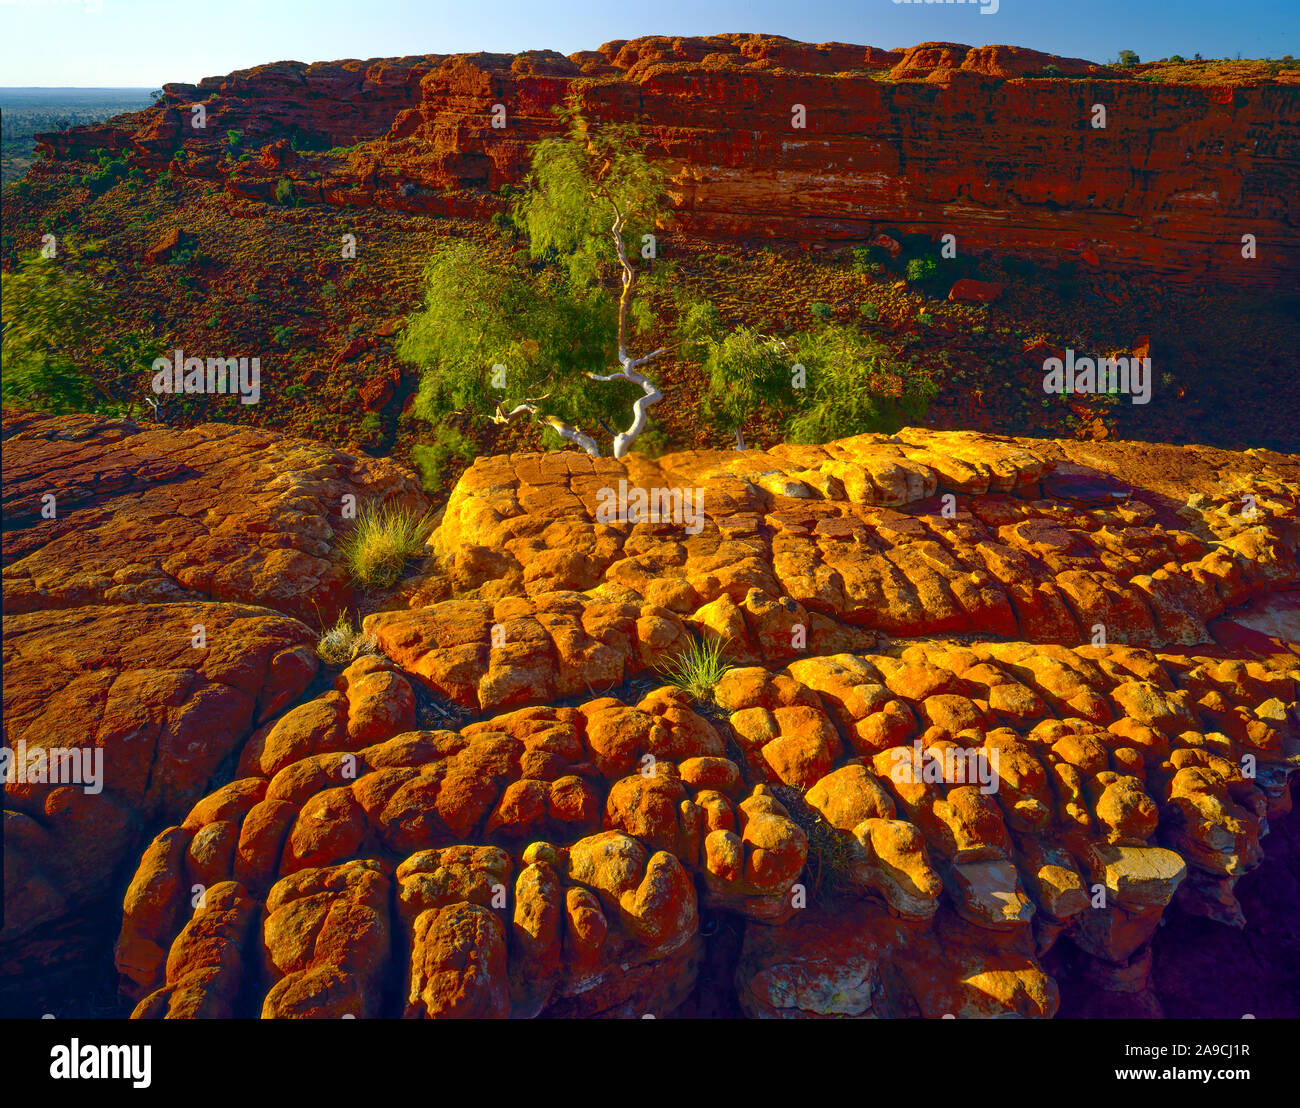 Modelli di roccia, Watarrka National Park, Australia , Kings Canyon, Northern Territory, Rim di Kings Creek, la città perduta Foto Stock